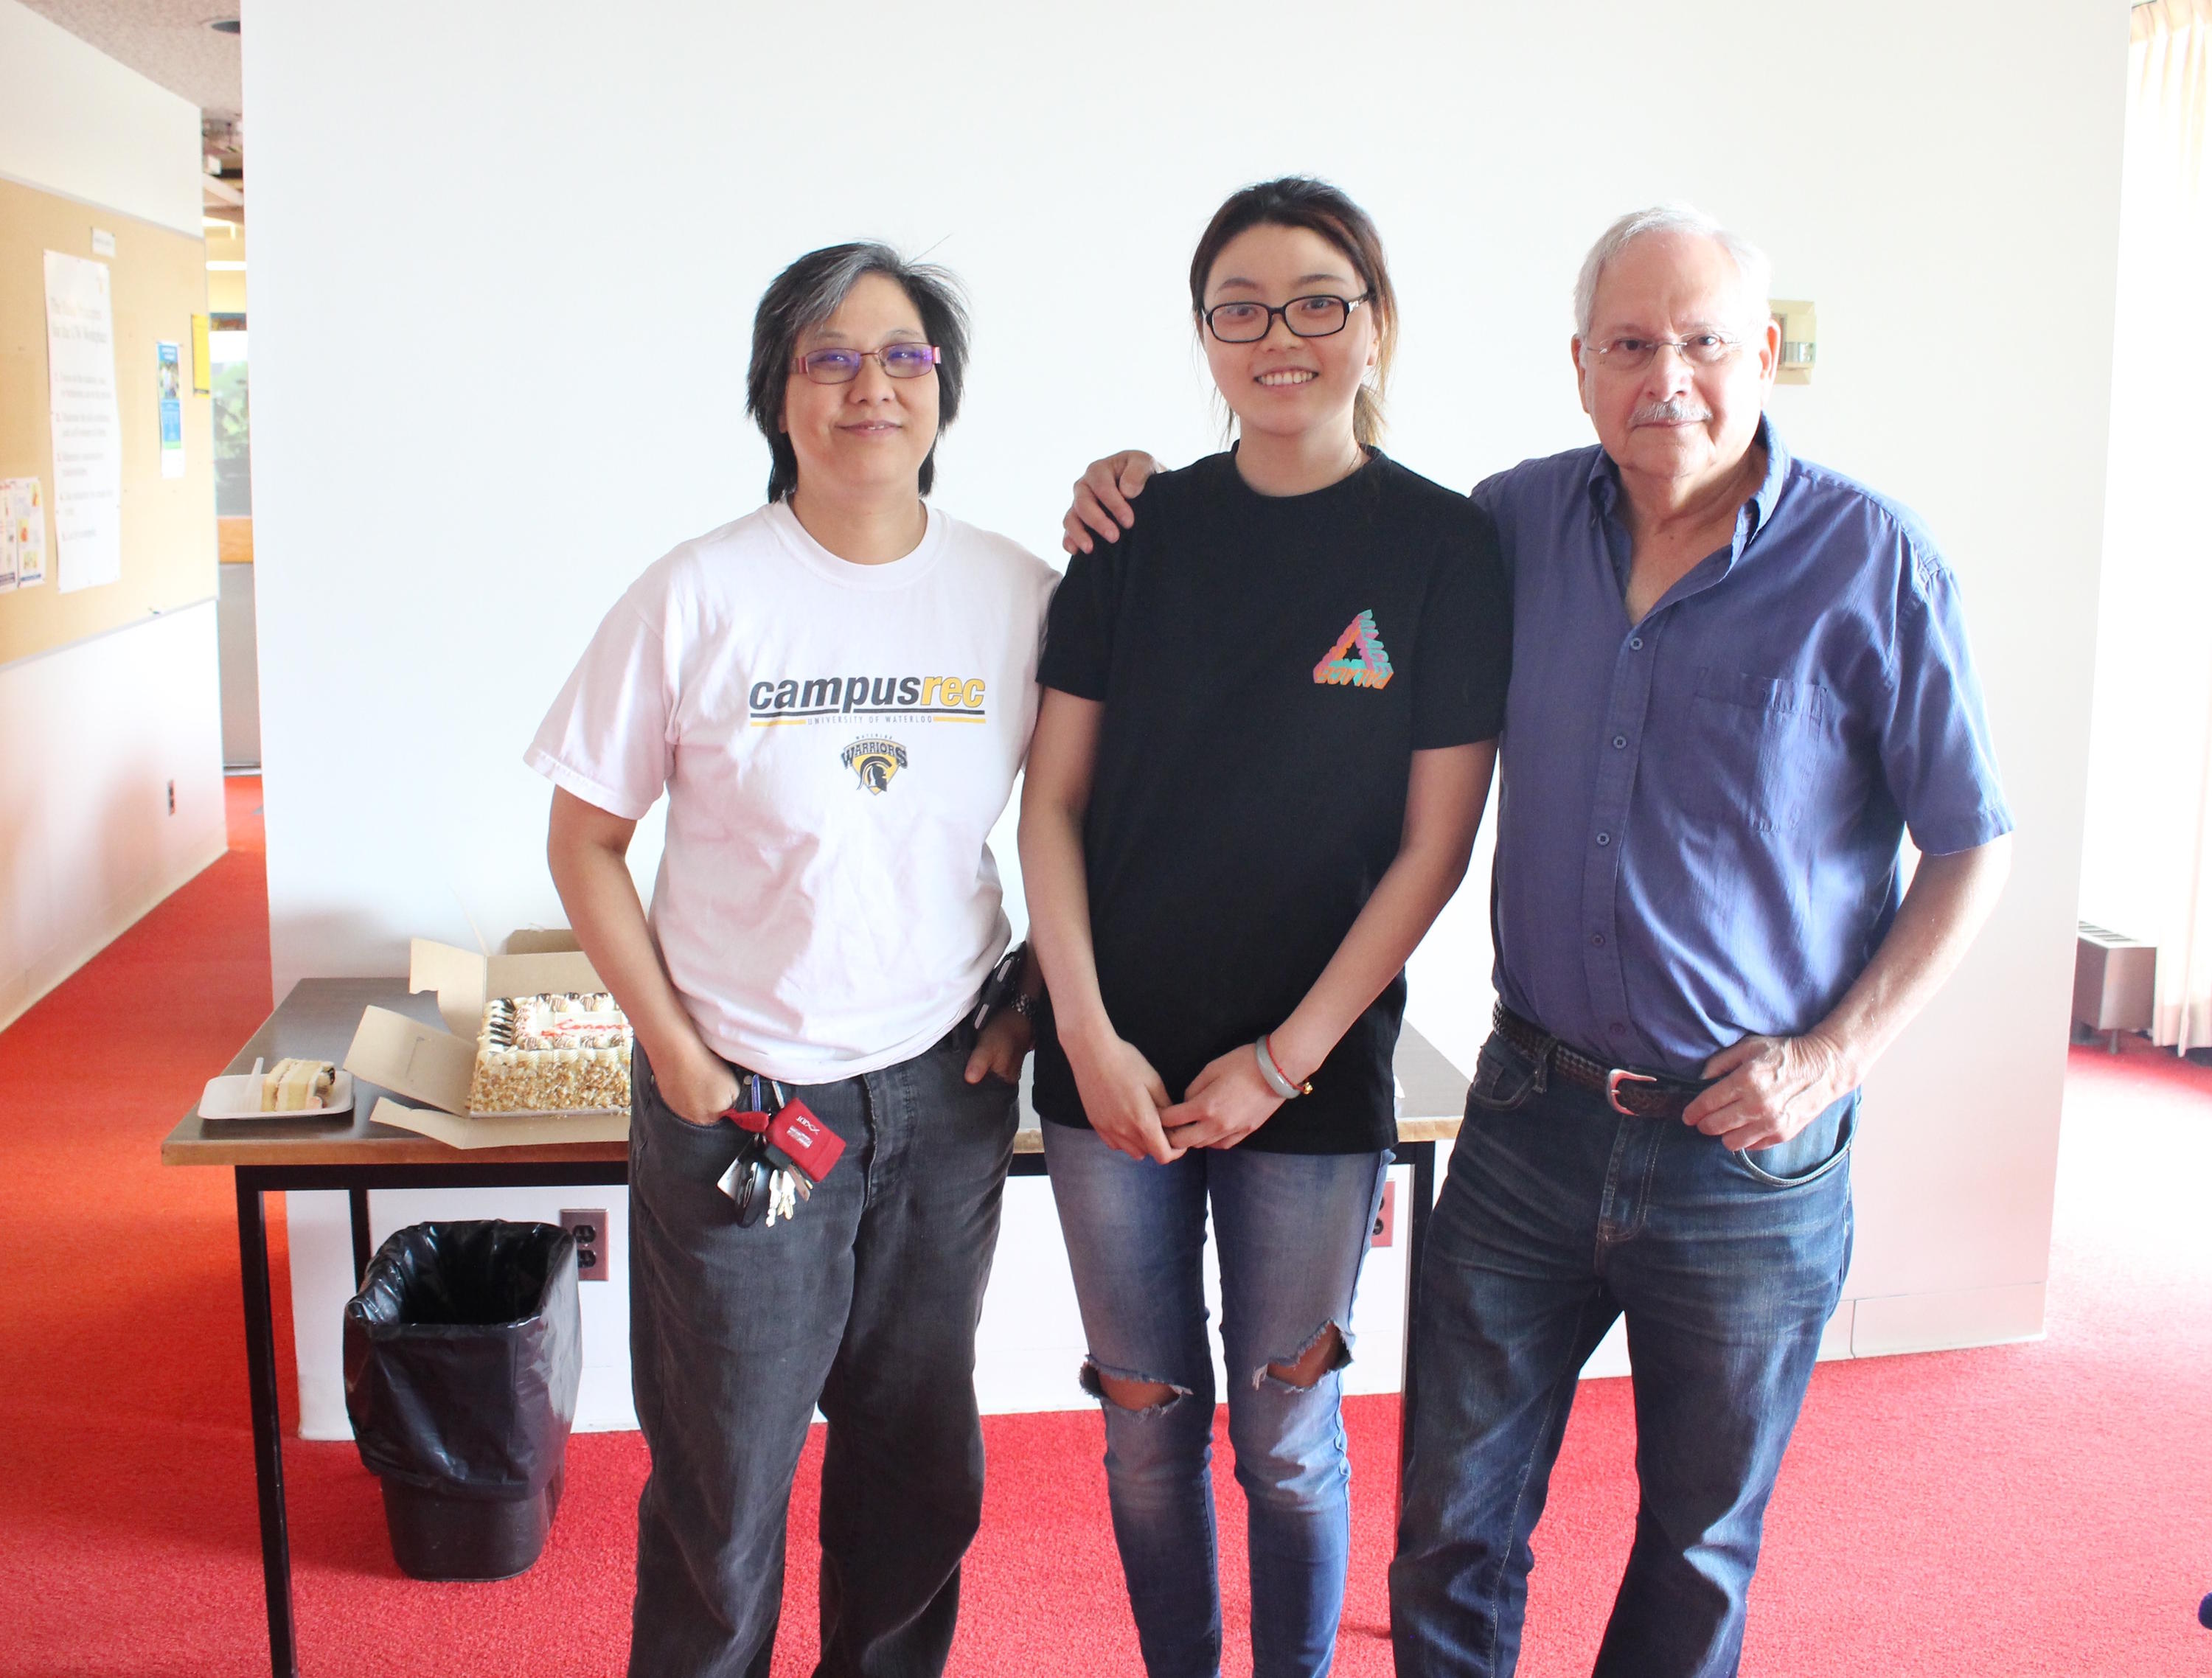 Jennifer Li (middle) her supervisors Dr. Vivian Choh (left) and Dr. Jake Sivak (Right)